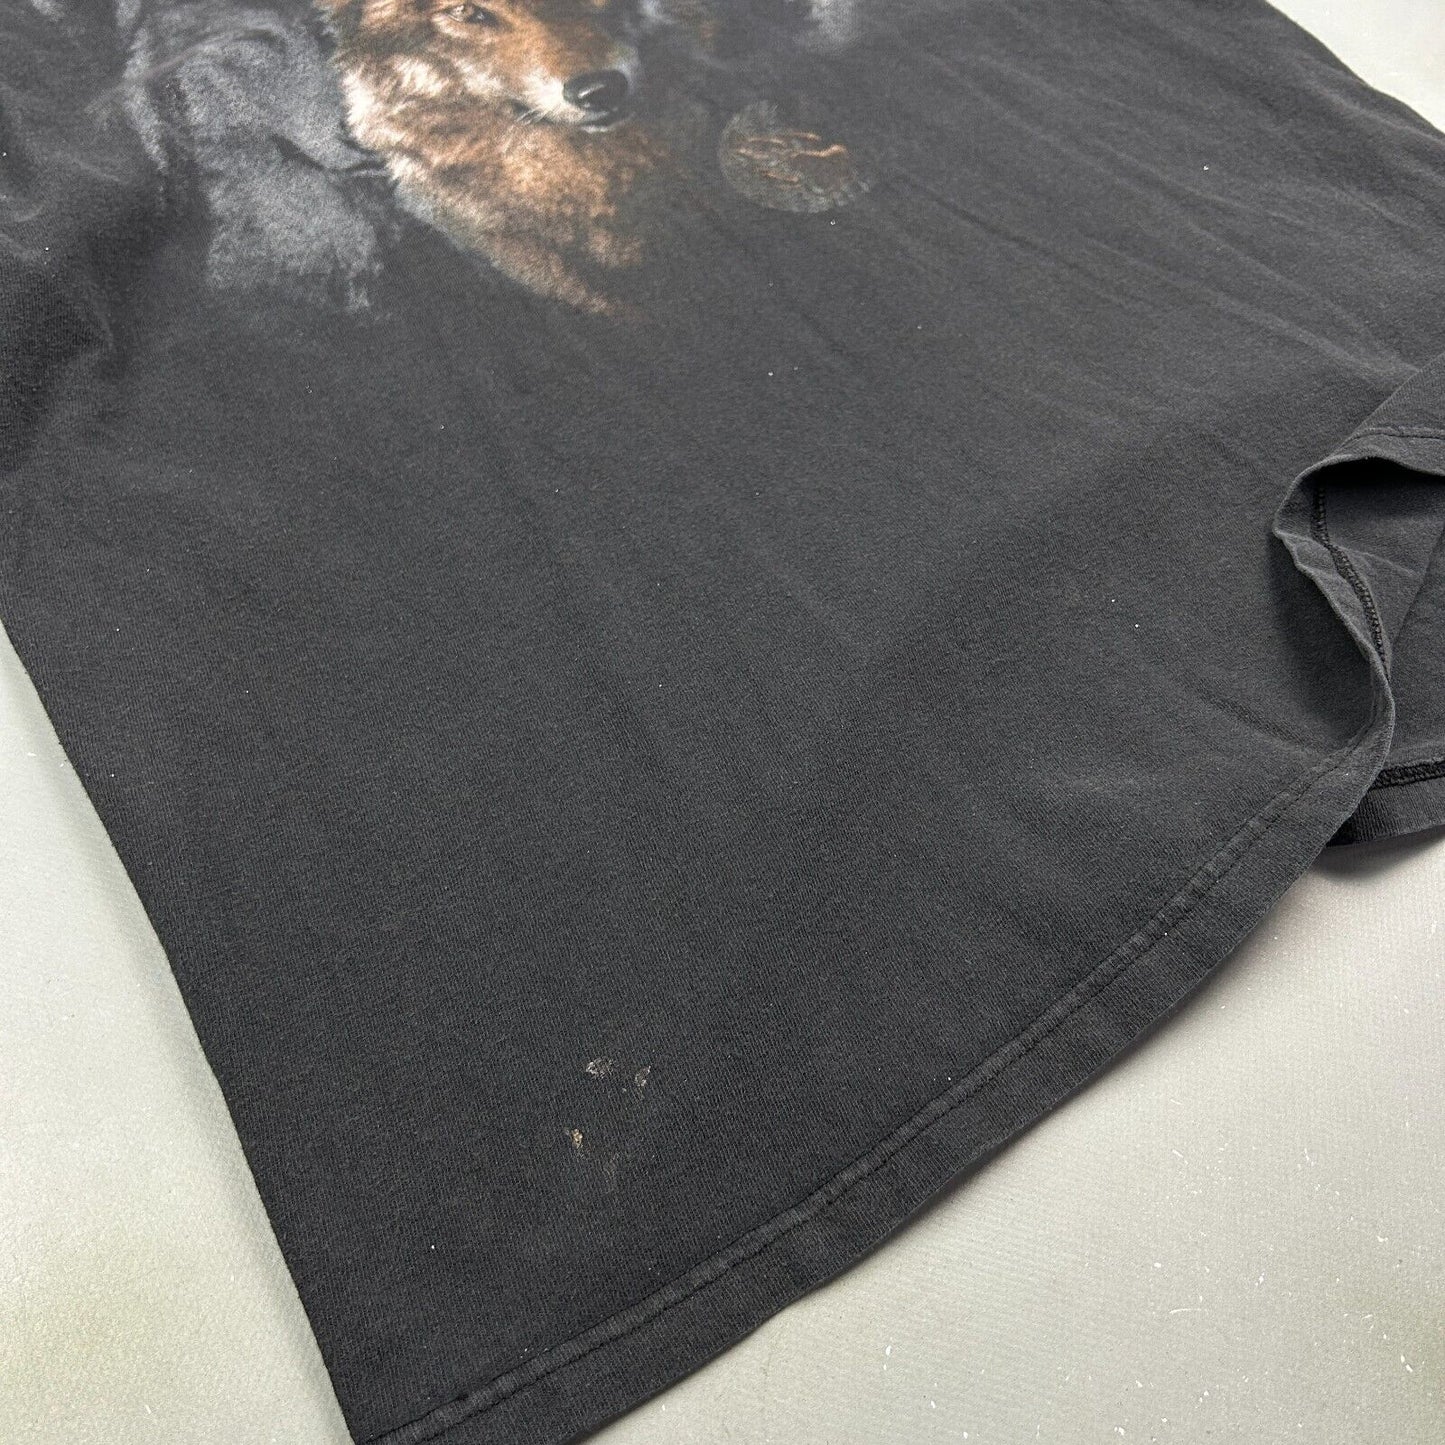 VINTAGE | Faded Wolves Pancake Bay ON Black Nature T-Shirt sz L-XL Adult